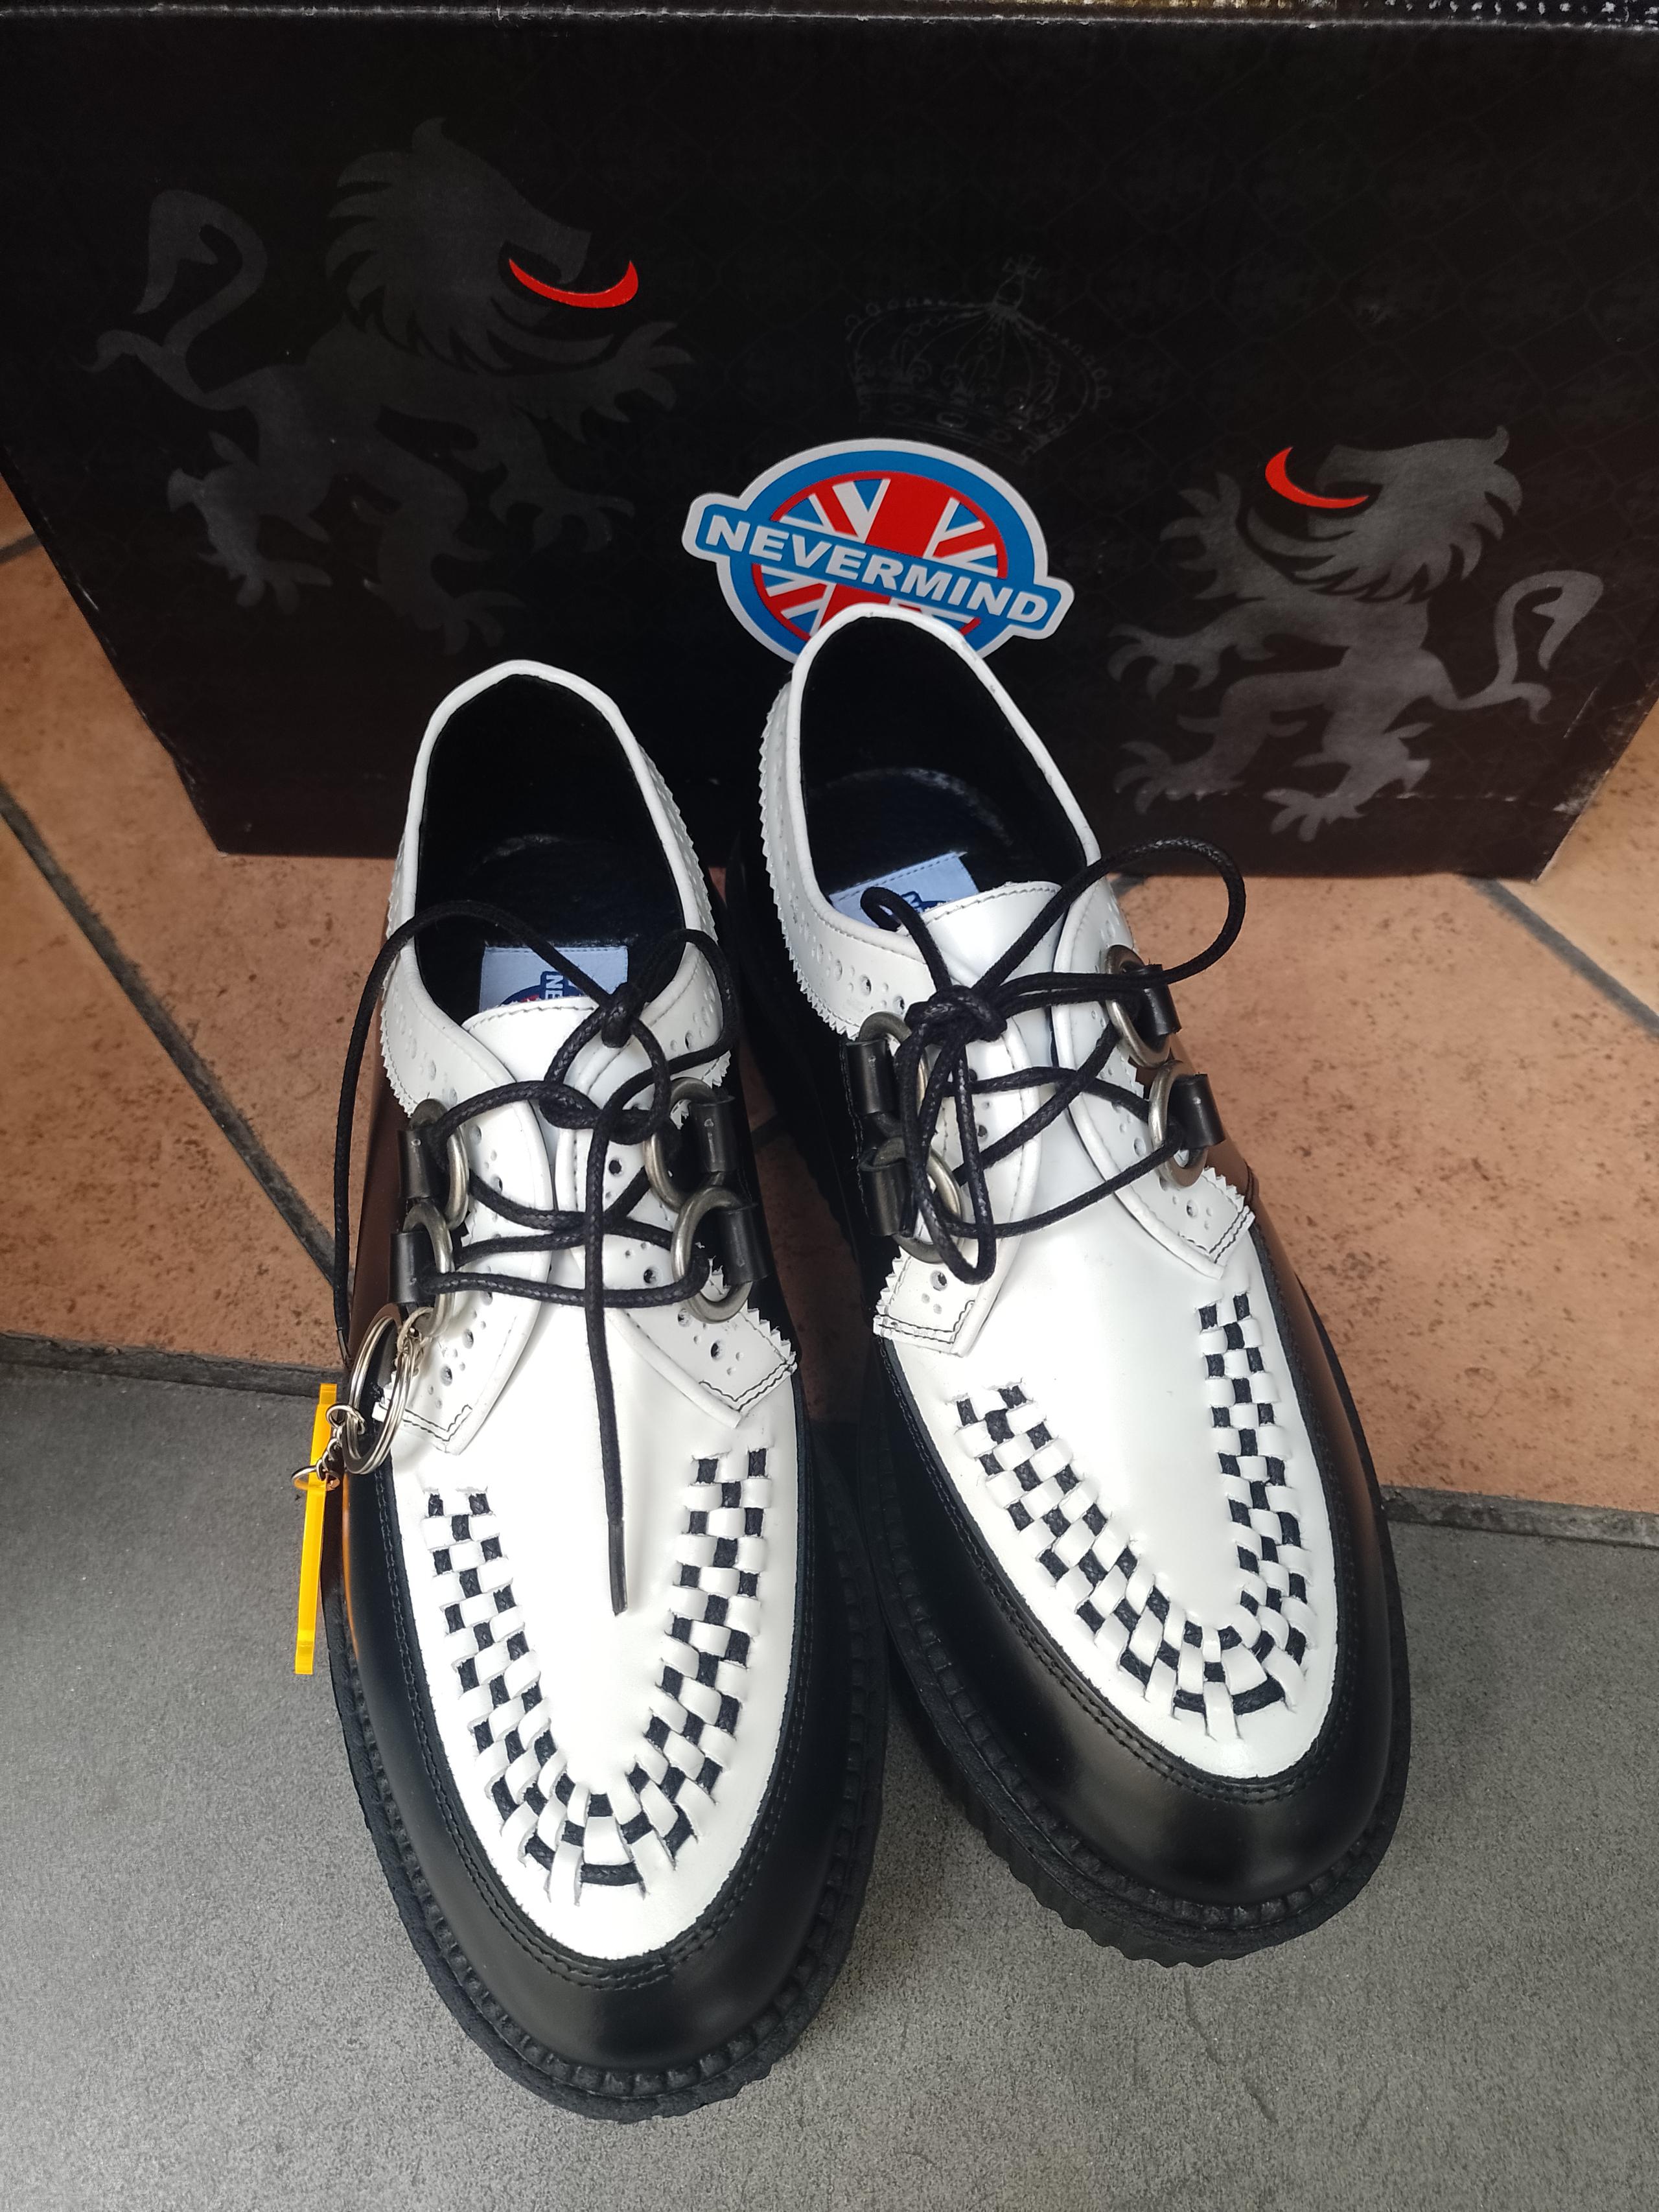 Creepers scarpe punta tonda vera pelle bicolore nero/bianco suola alta